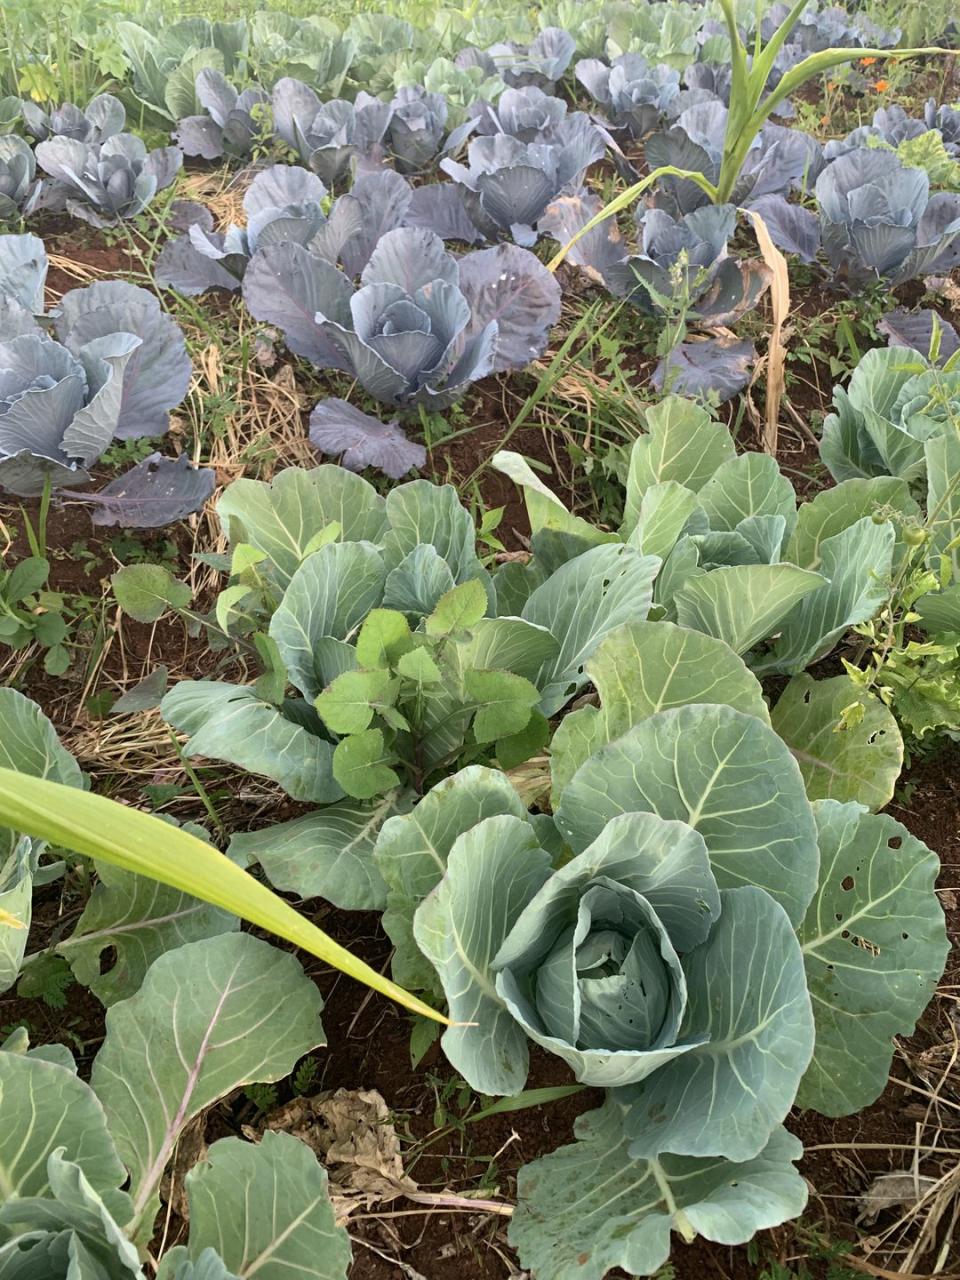 11) Cabbage